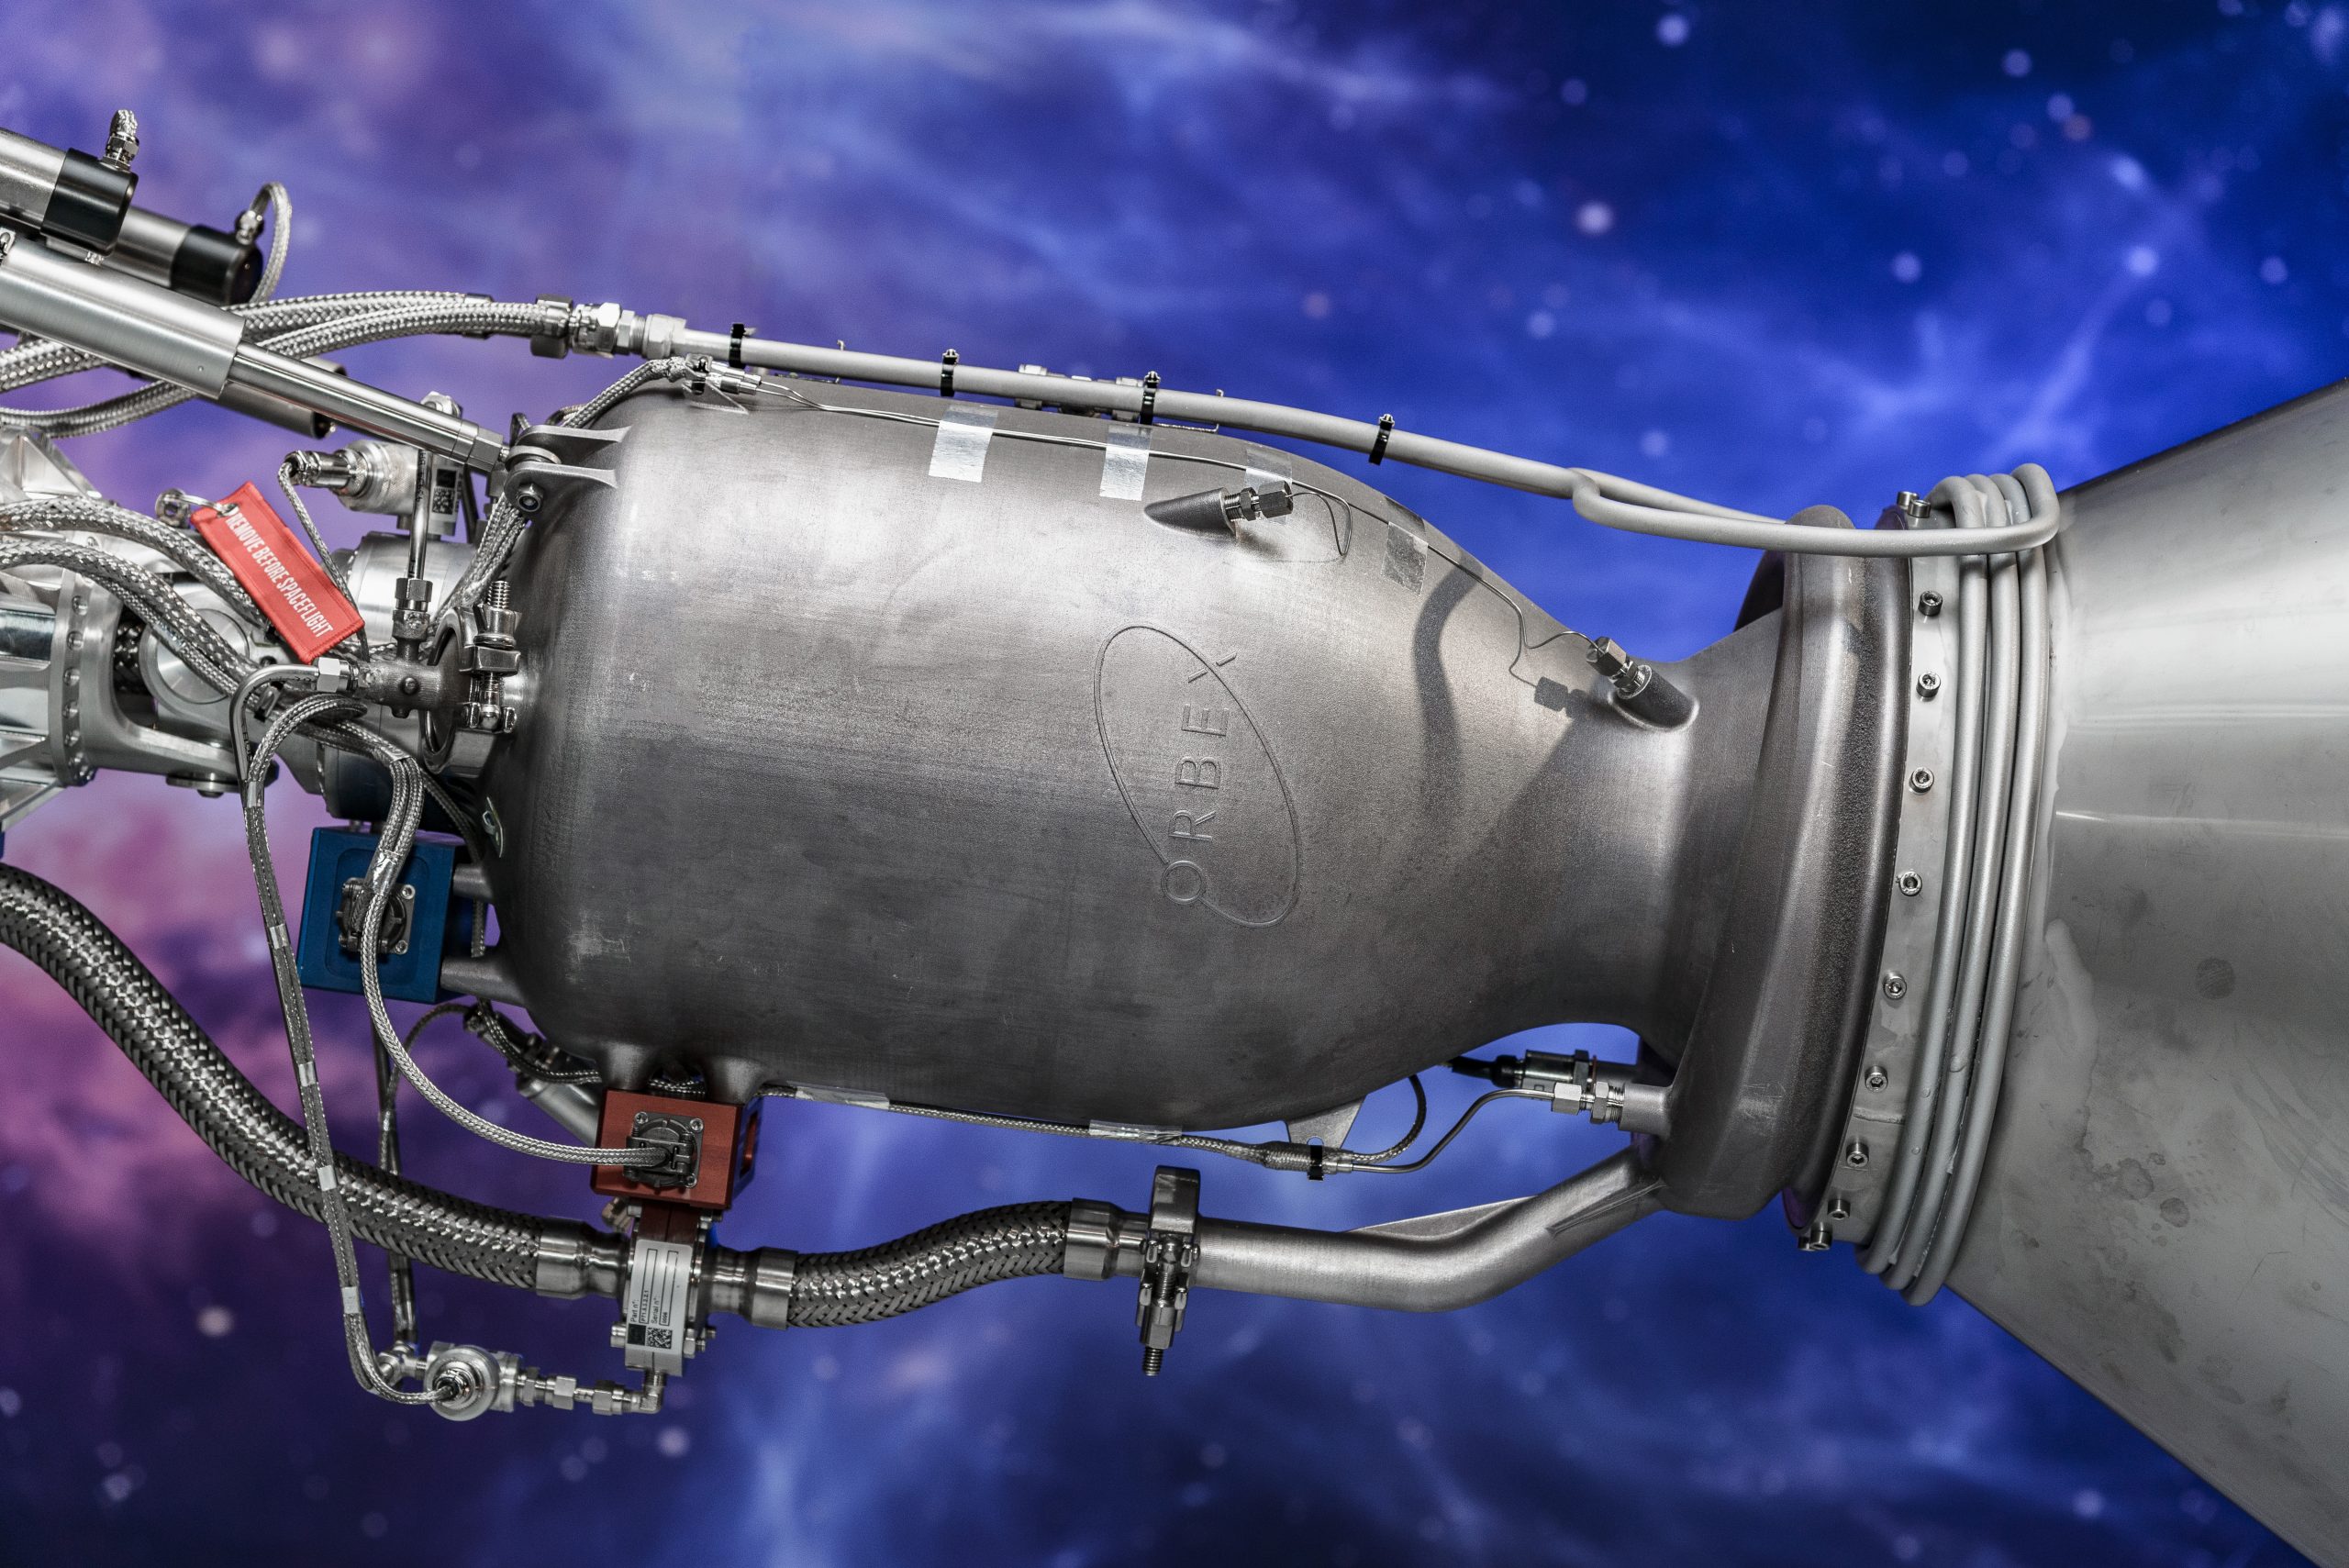 Orbex 3D printed rocket engine in Stage 2 rocket engineering prototype. Photo via Orbex.